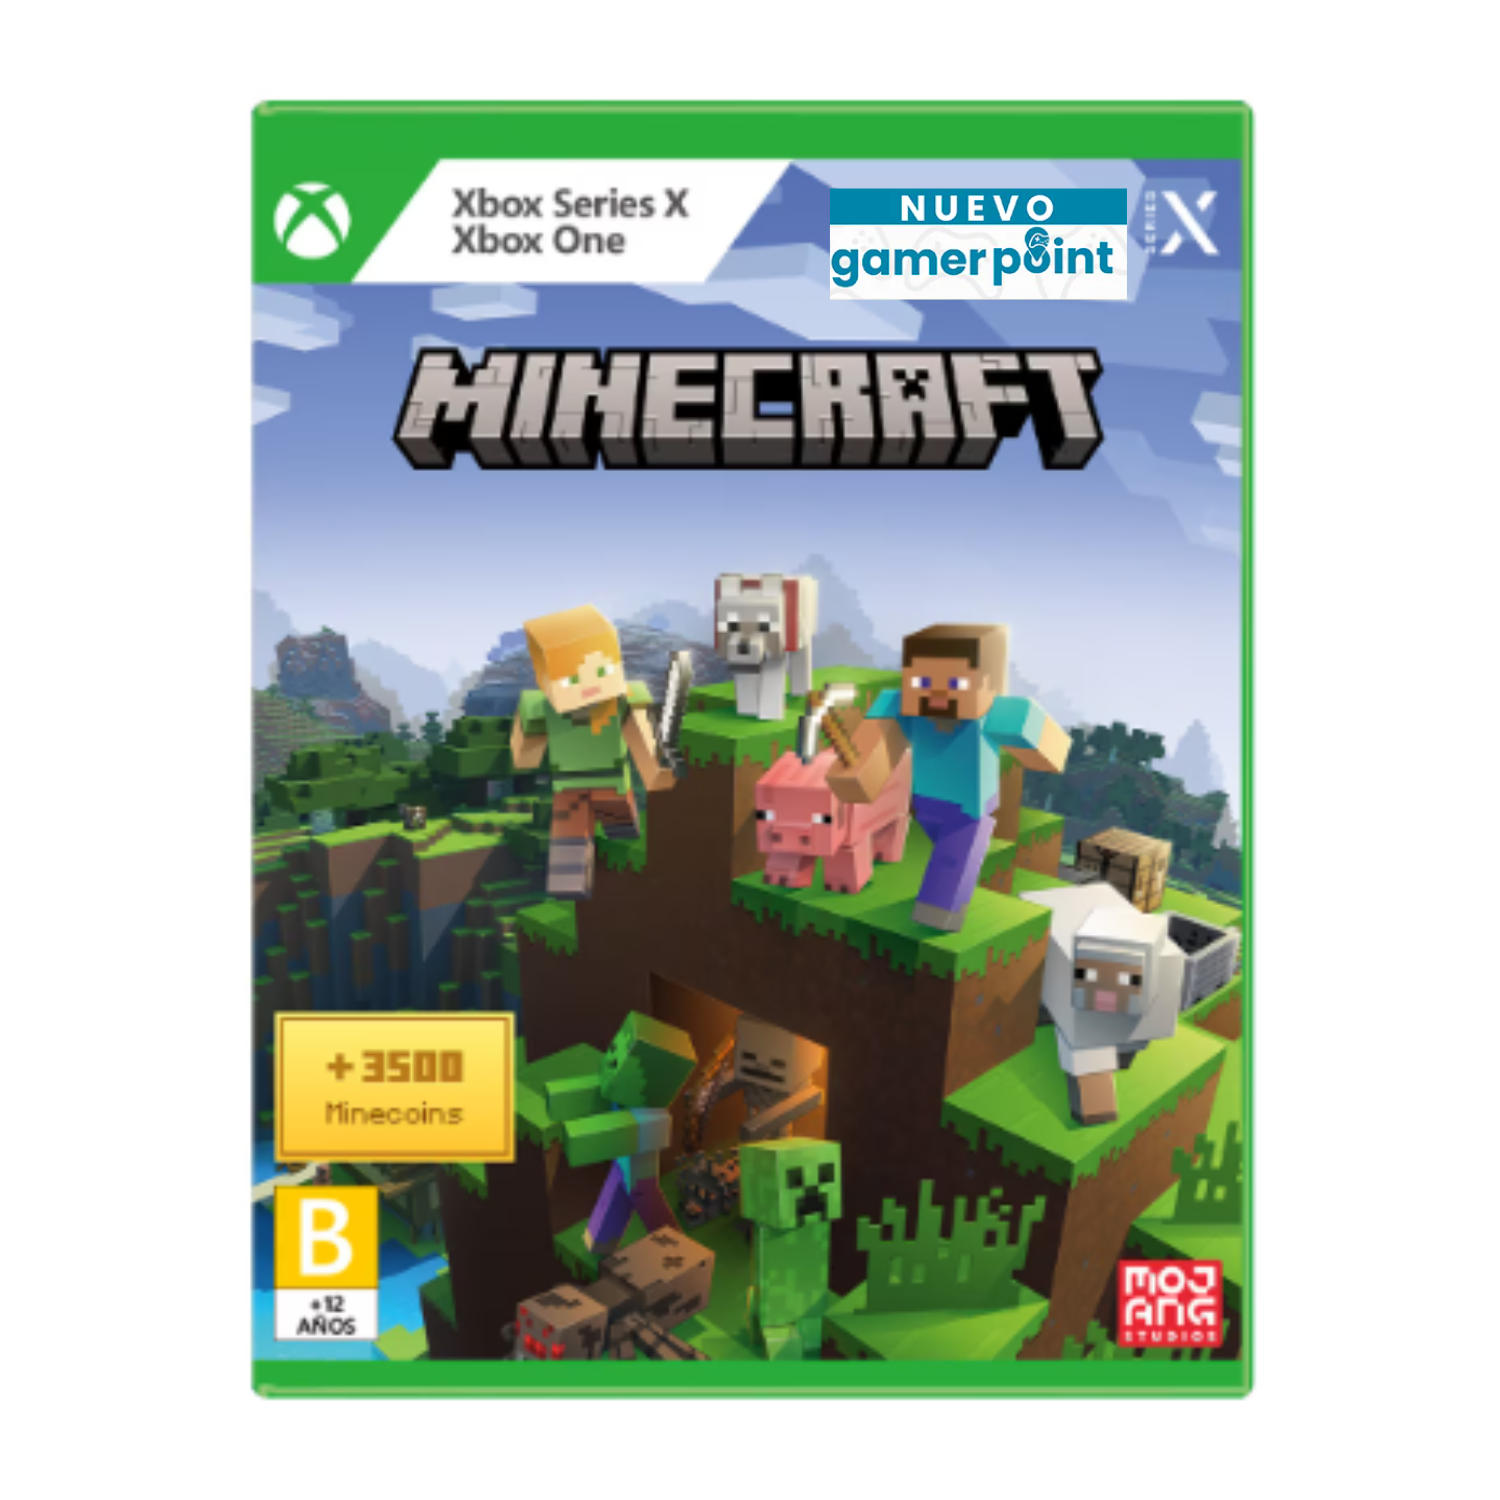 Minecraft + 3500 Minecoins Xbox One